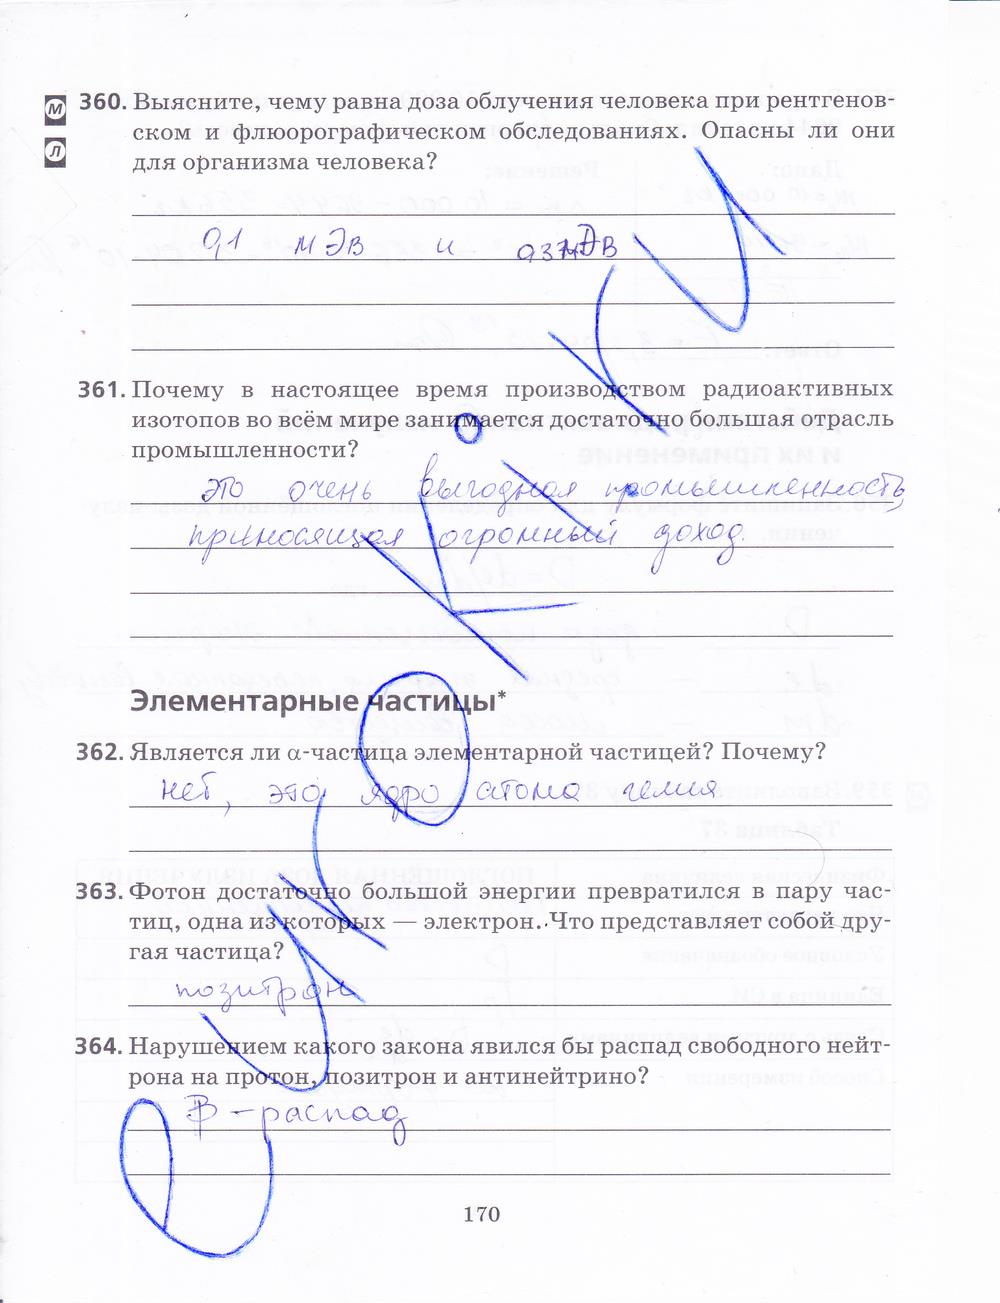 гдз 9 класс рабочая тетрадь страница 170 физика Пурышева, Важеевская, Чаругин